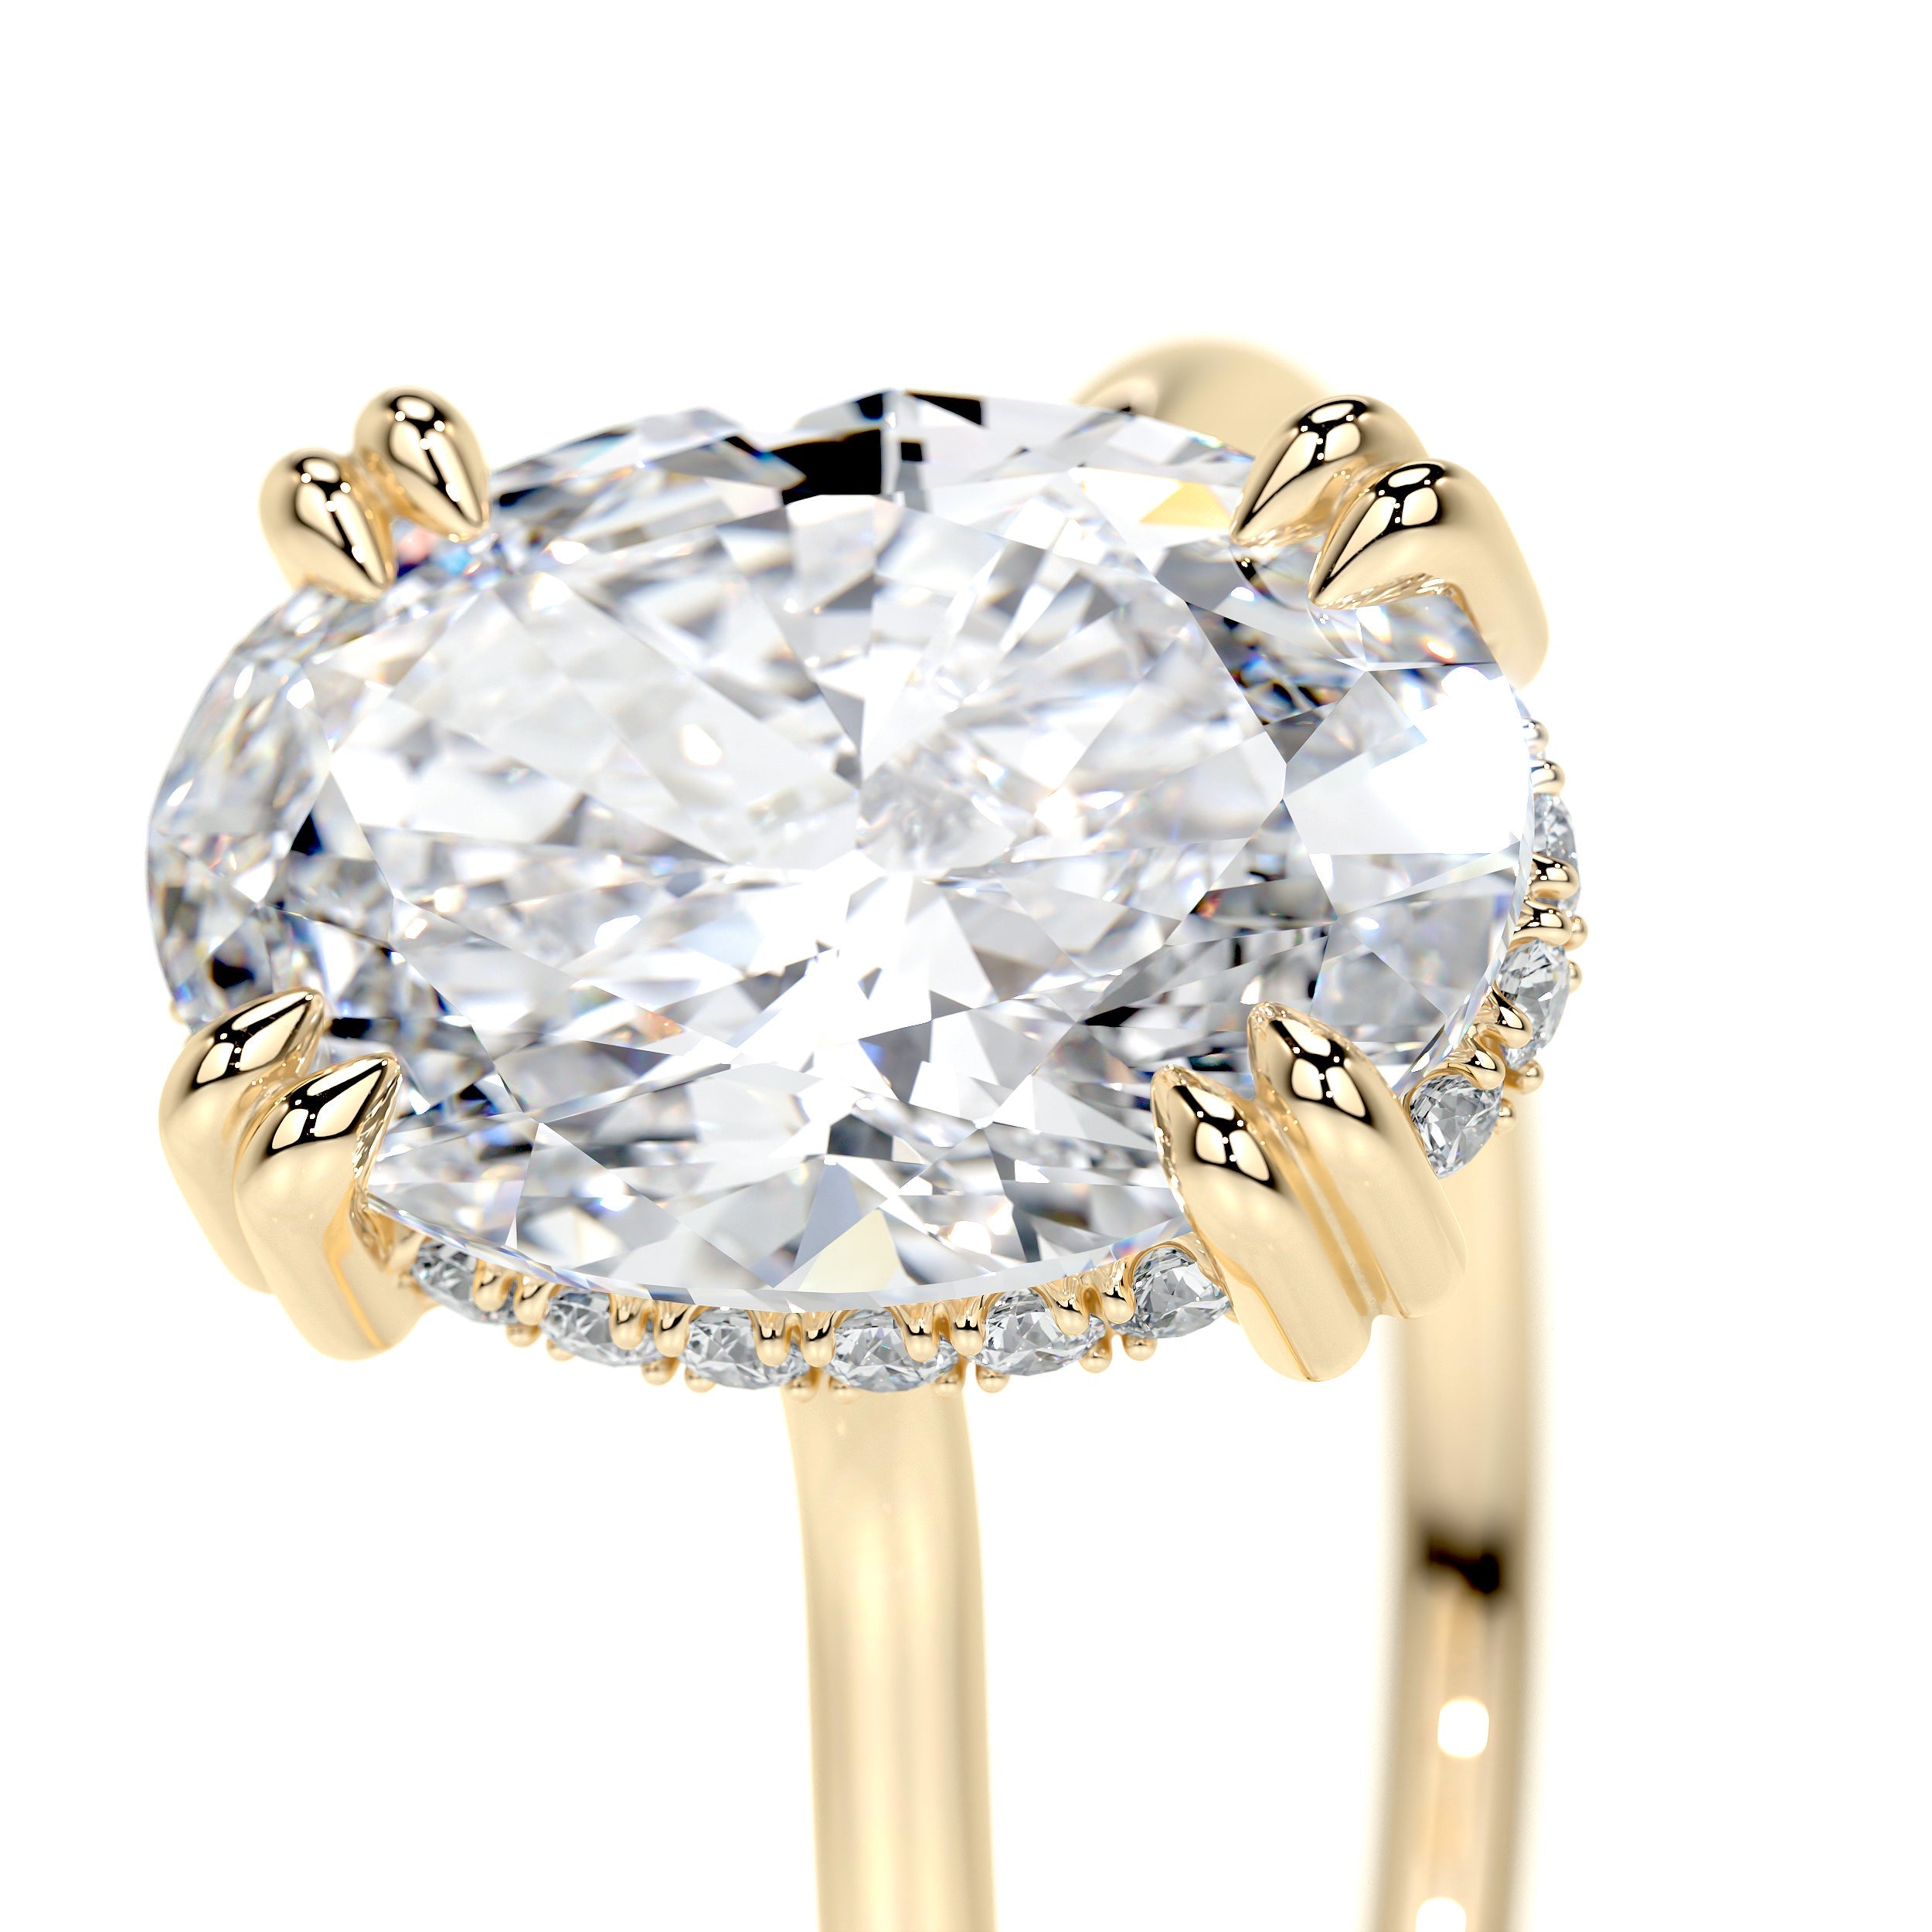 Harriet Lab Grown Diamond Ring   (3.1 Carat) -18K Yellow Gold